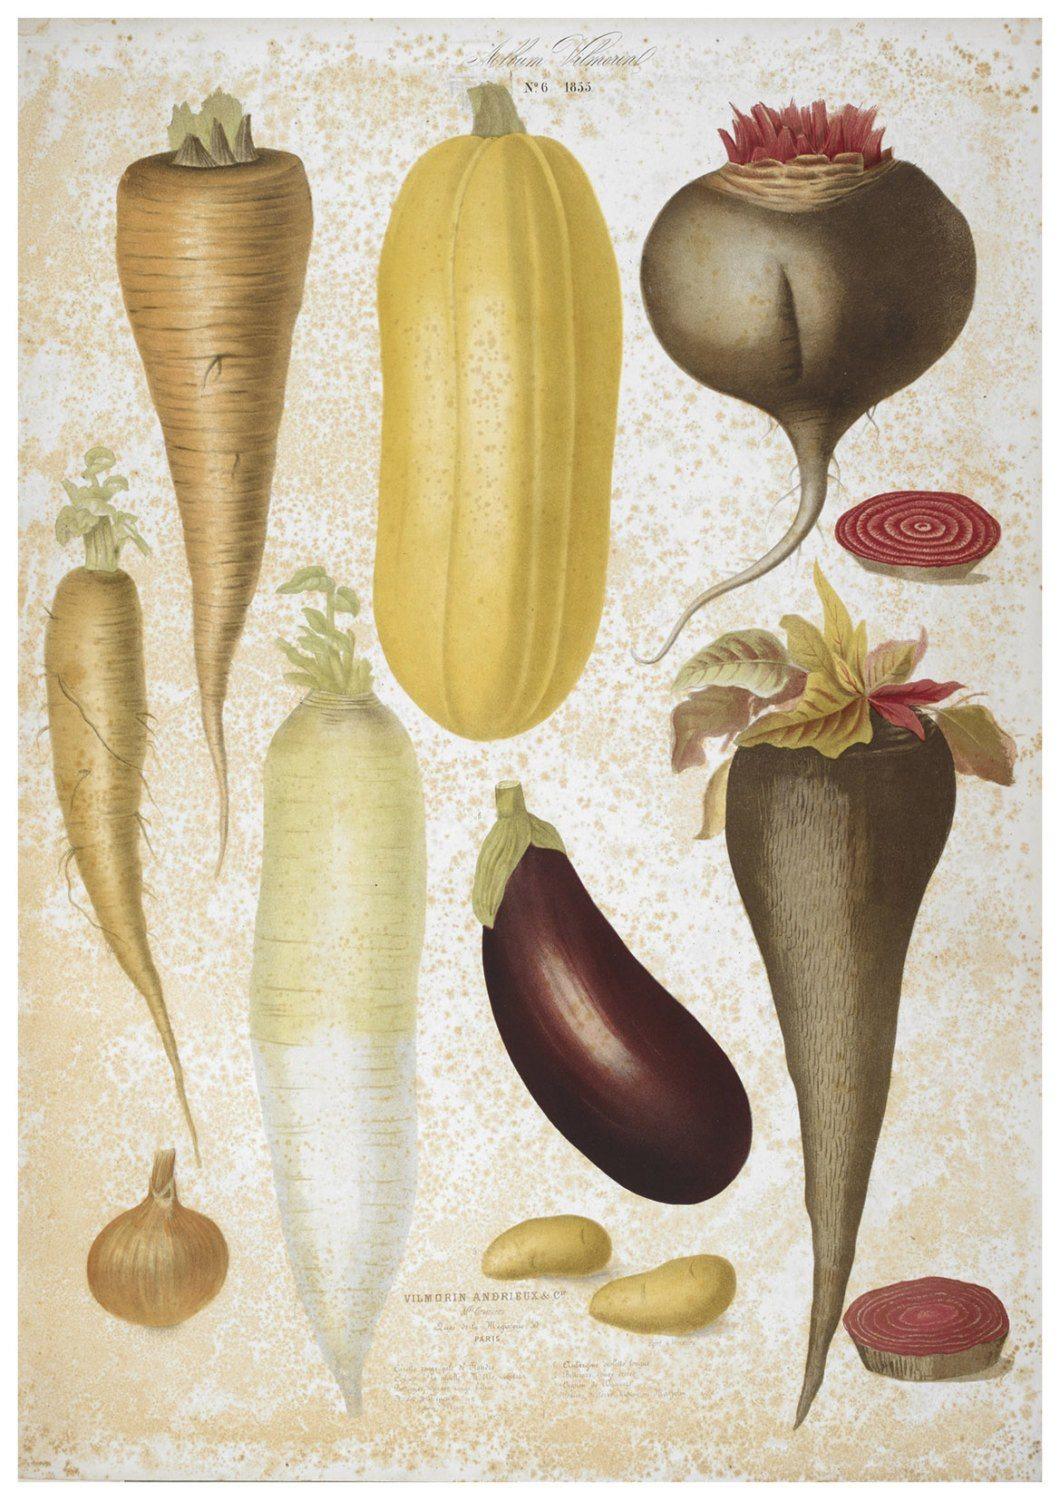 VEGETABLES PRINT: Aubergine, Corn, Parsnip, Leek Art - Pimlico Prints